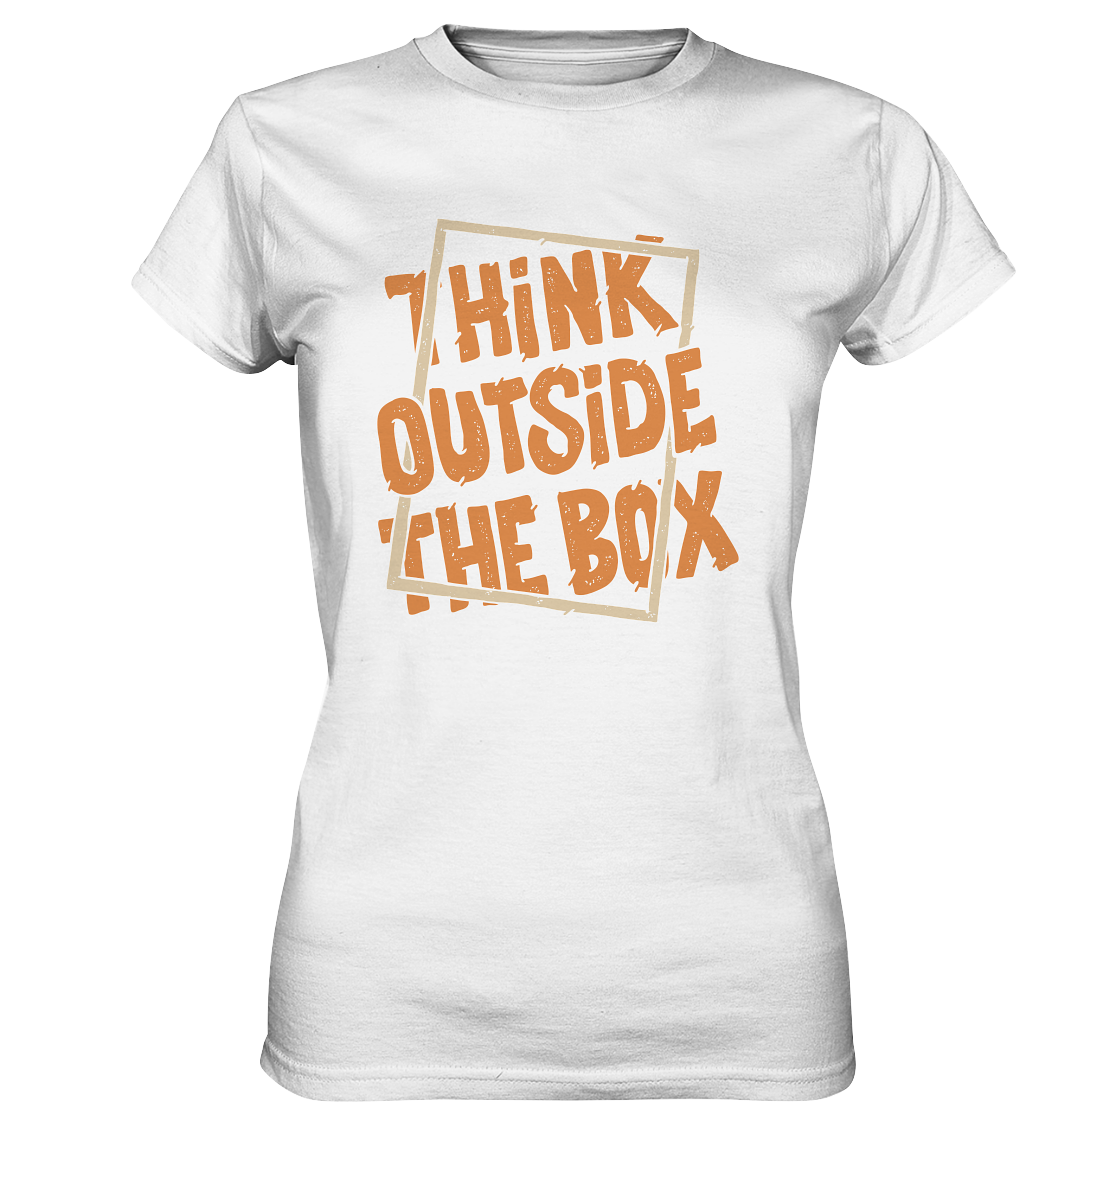 Think outside the box - Ladies Premium Shirt - mehrere Farben